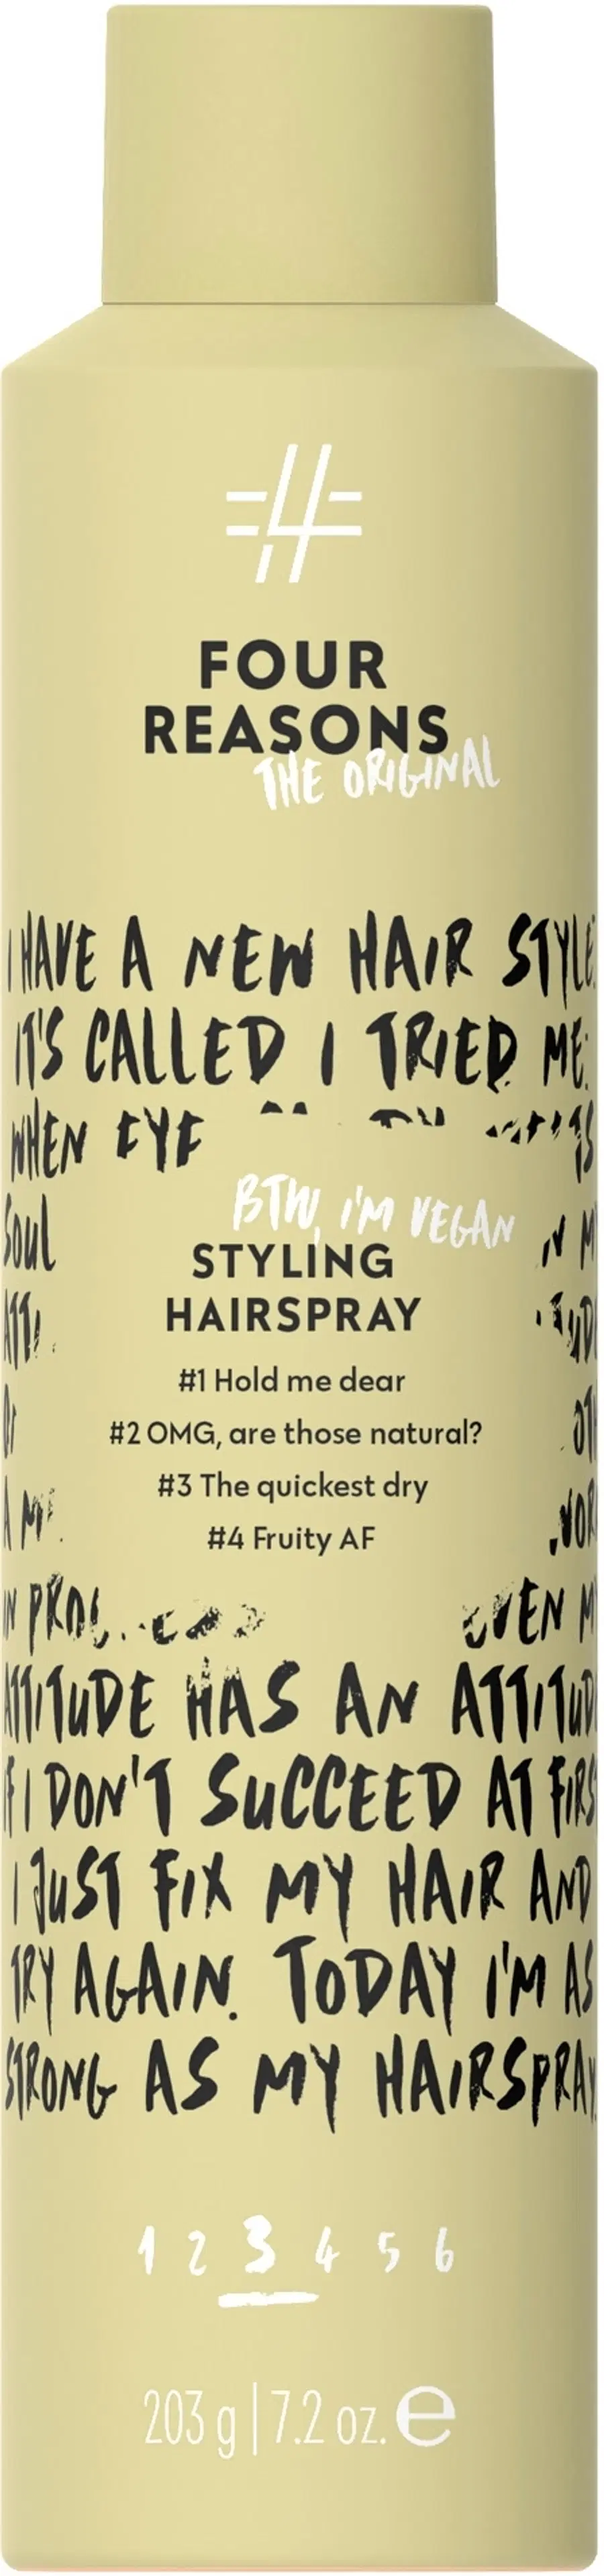 Four Reasons Original Styling Hairspray hiuskiinne 300 ml